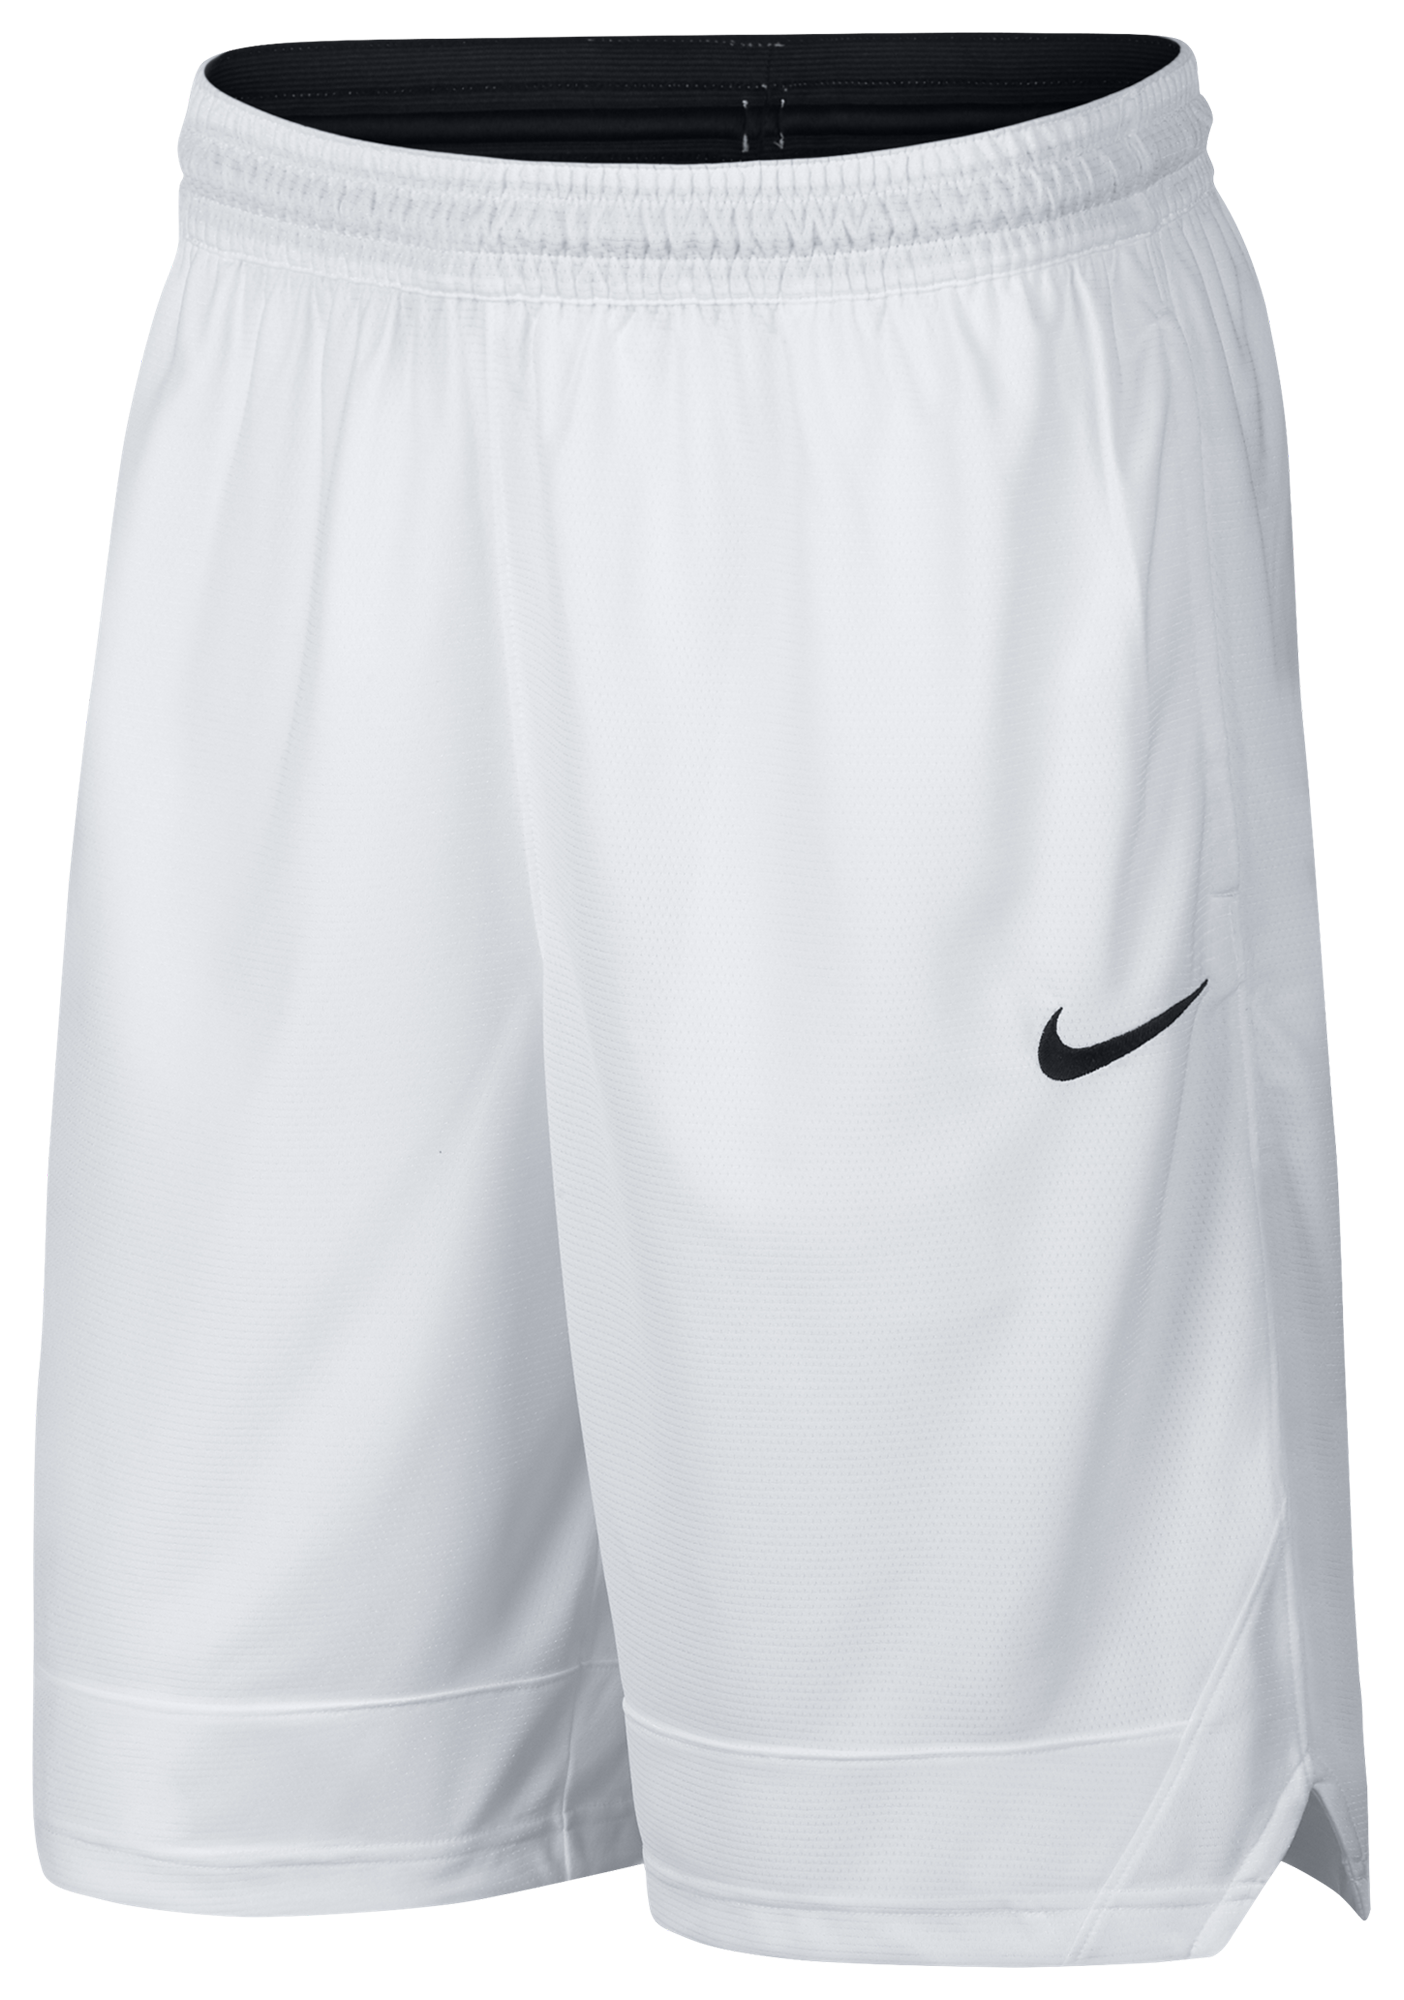 Men's Nike Shorts | Foot Locker